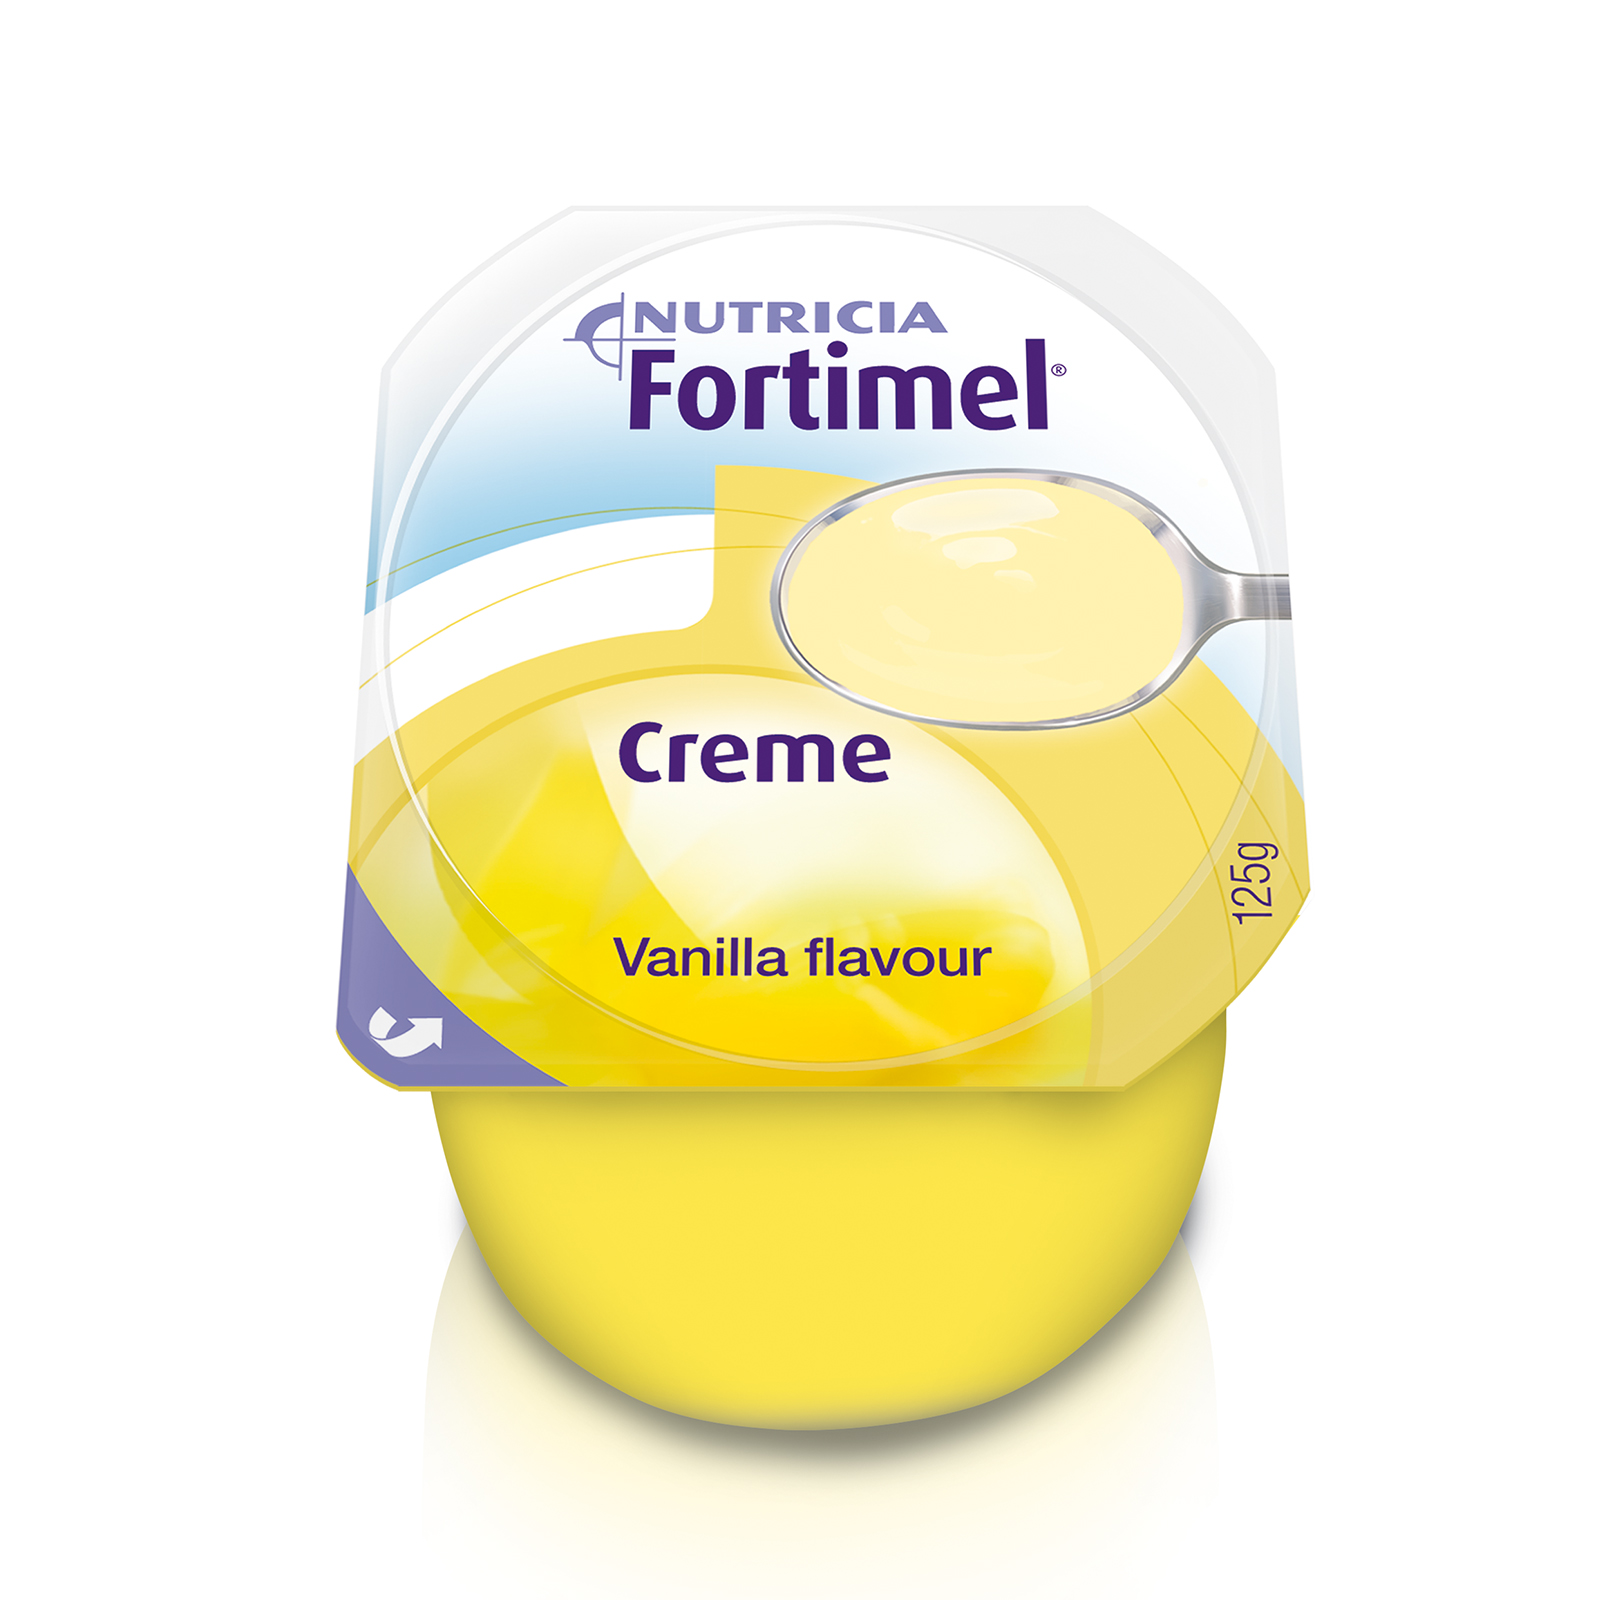 Fortimel Creme vaniglia 4x Vasetto 125 g | Nutricia